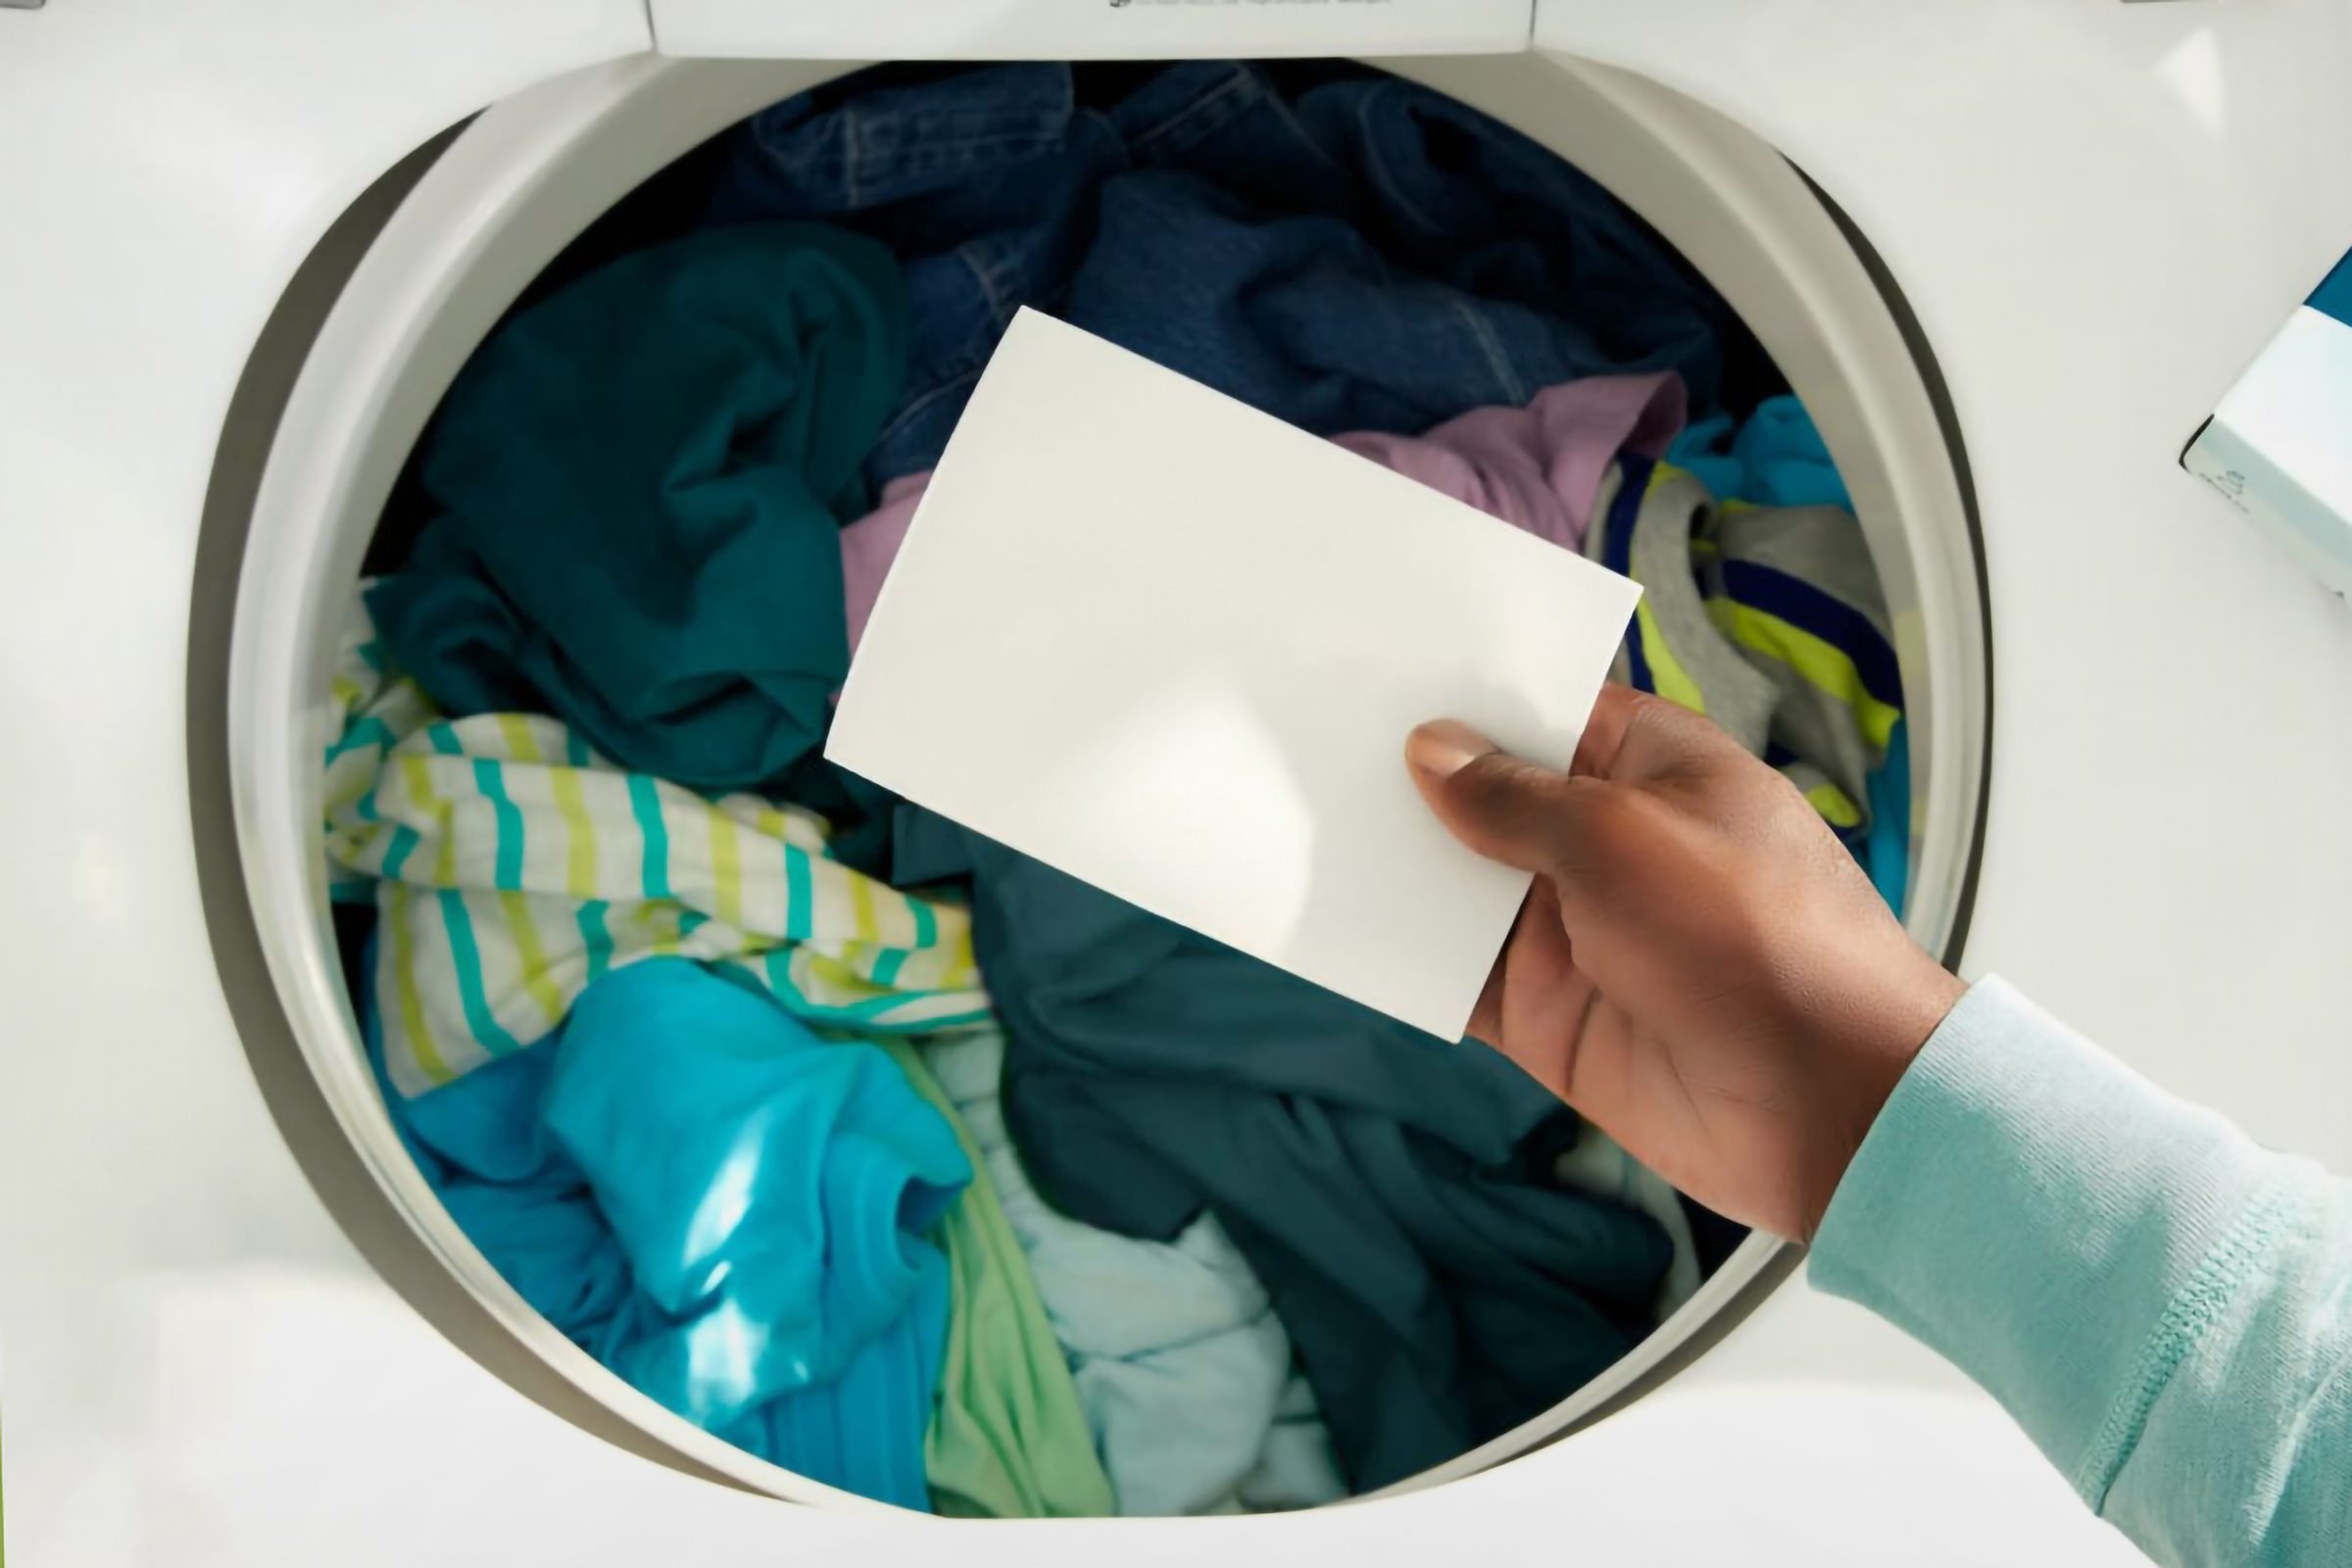 https://www.tasteofhome.com/wp-content/uploads/2022/09/grove-co-laundry-detergent-sheets-LS-via-grove.co-ecomm.jpg